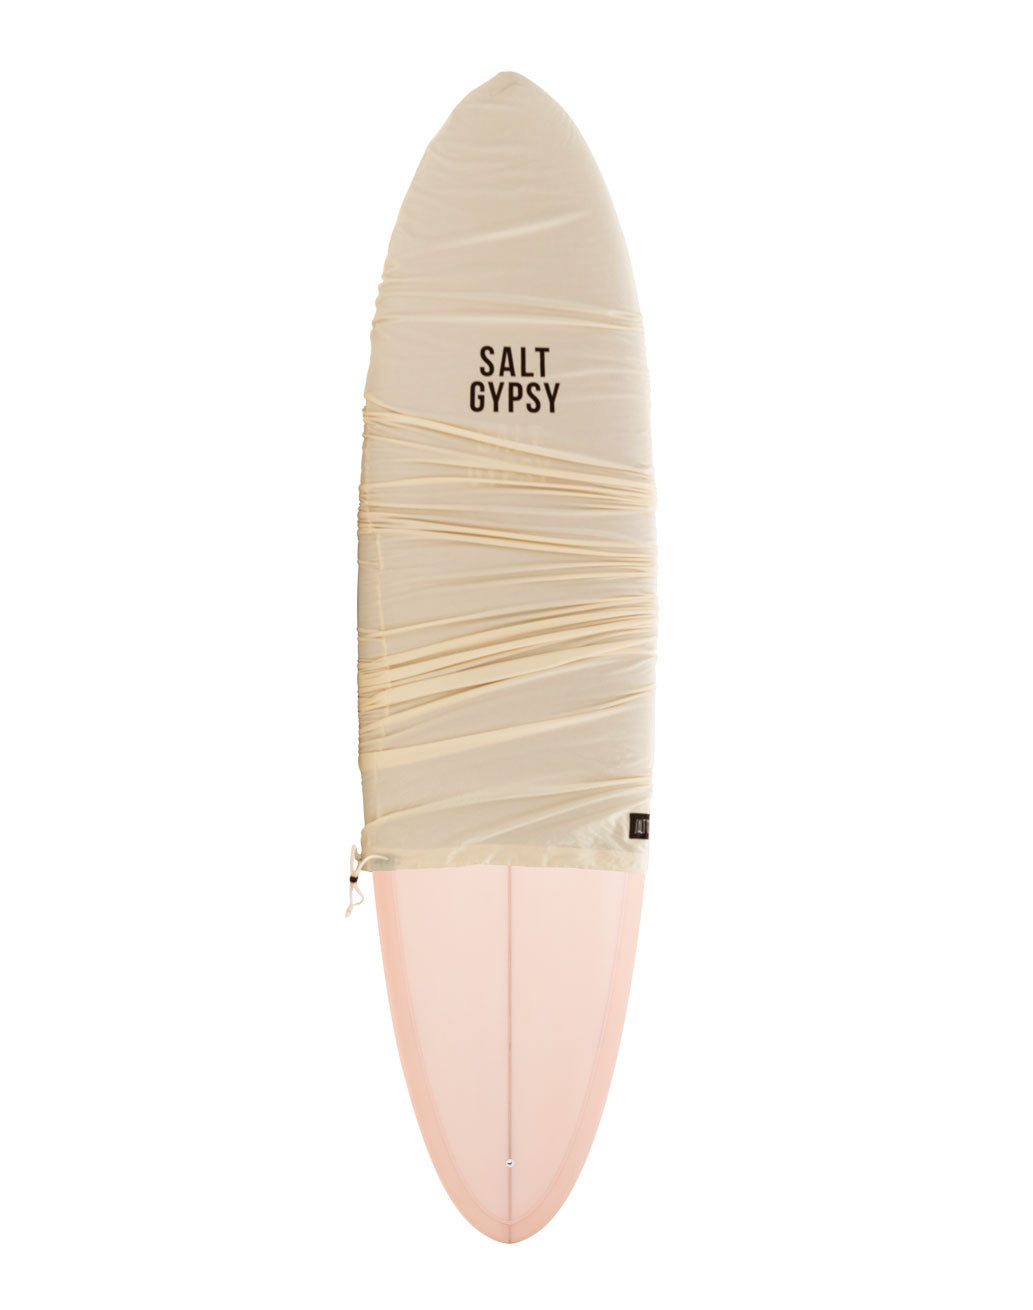 Salt Gypsy Surfboards - Mid Tide blush pink mid length surfboard